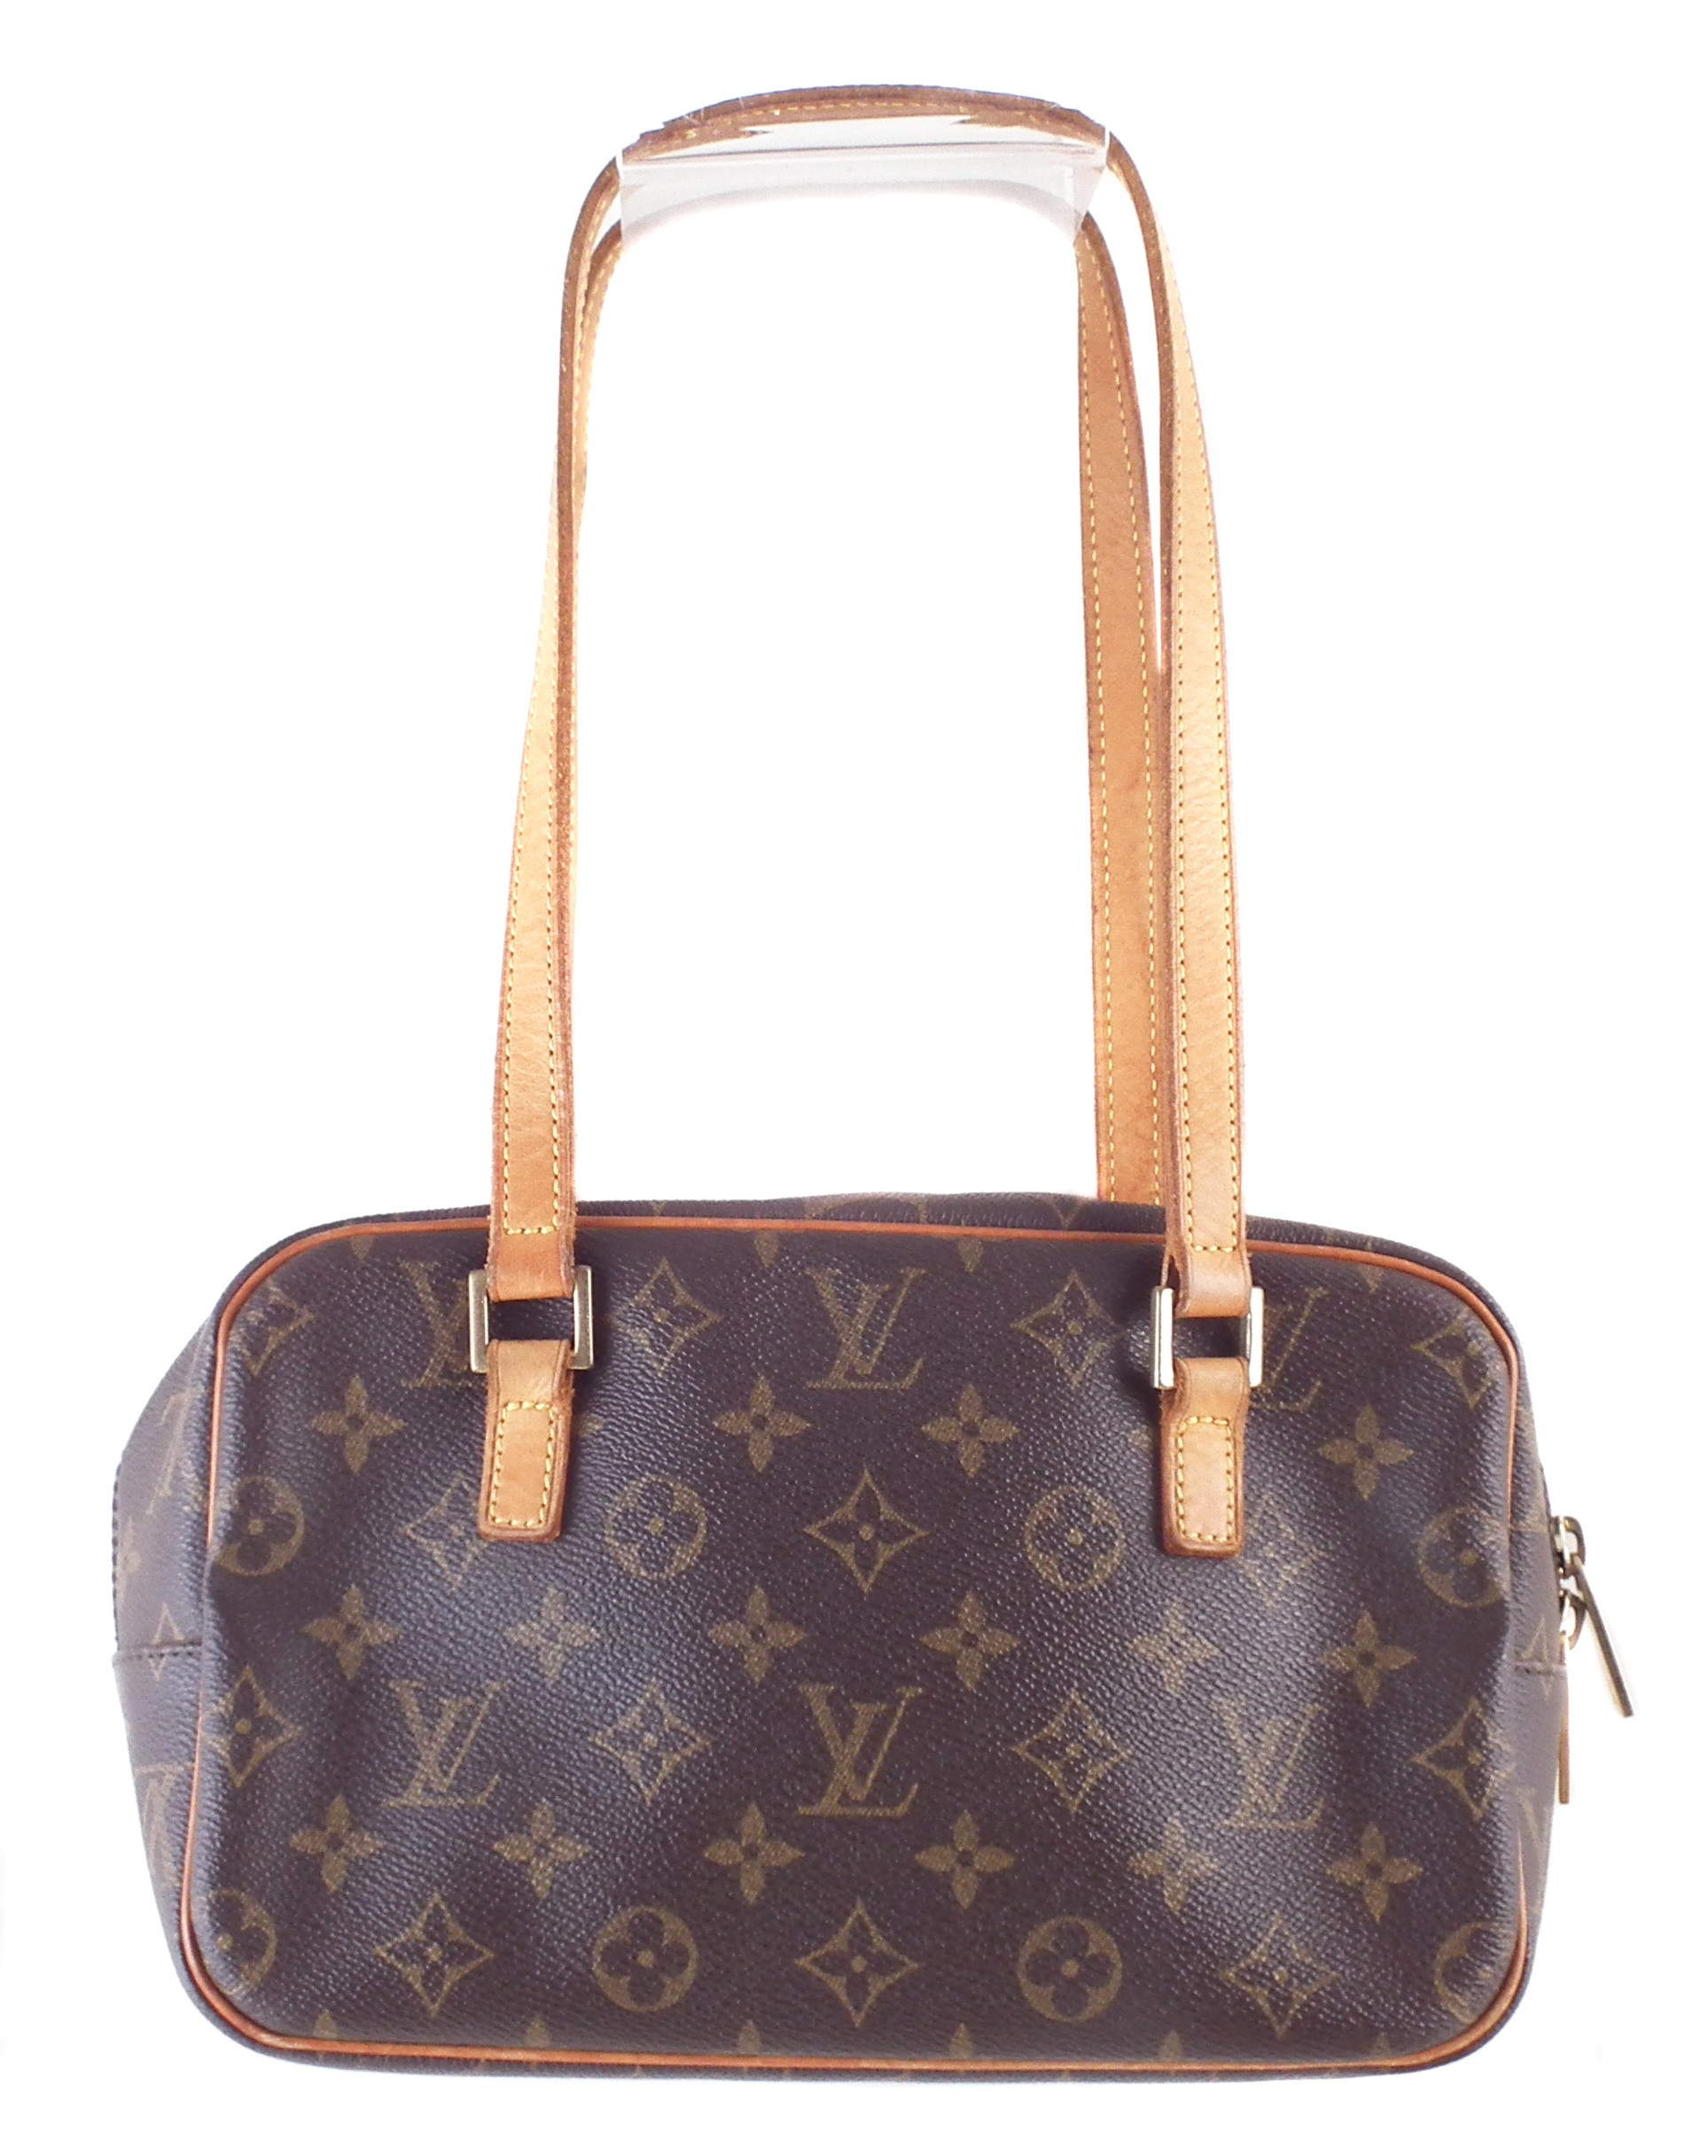 A Louis Vuitton Monogram Cite MM handbag,